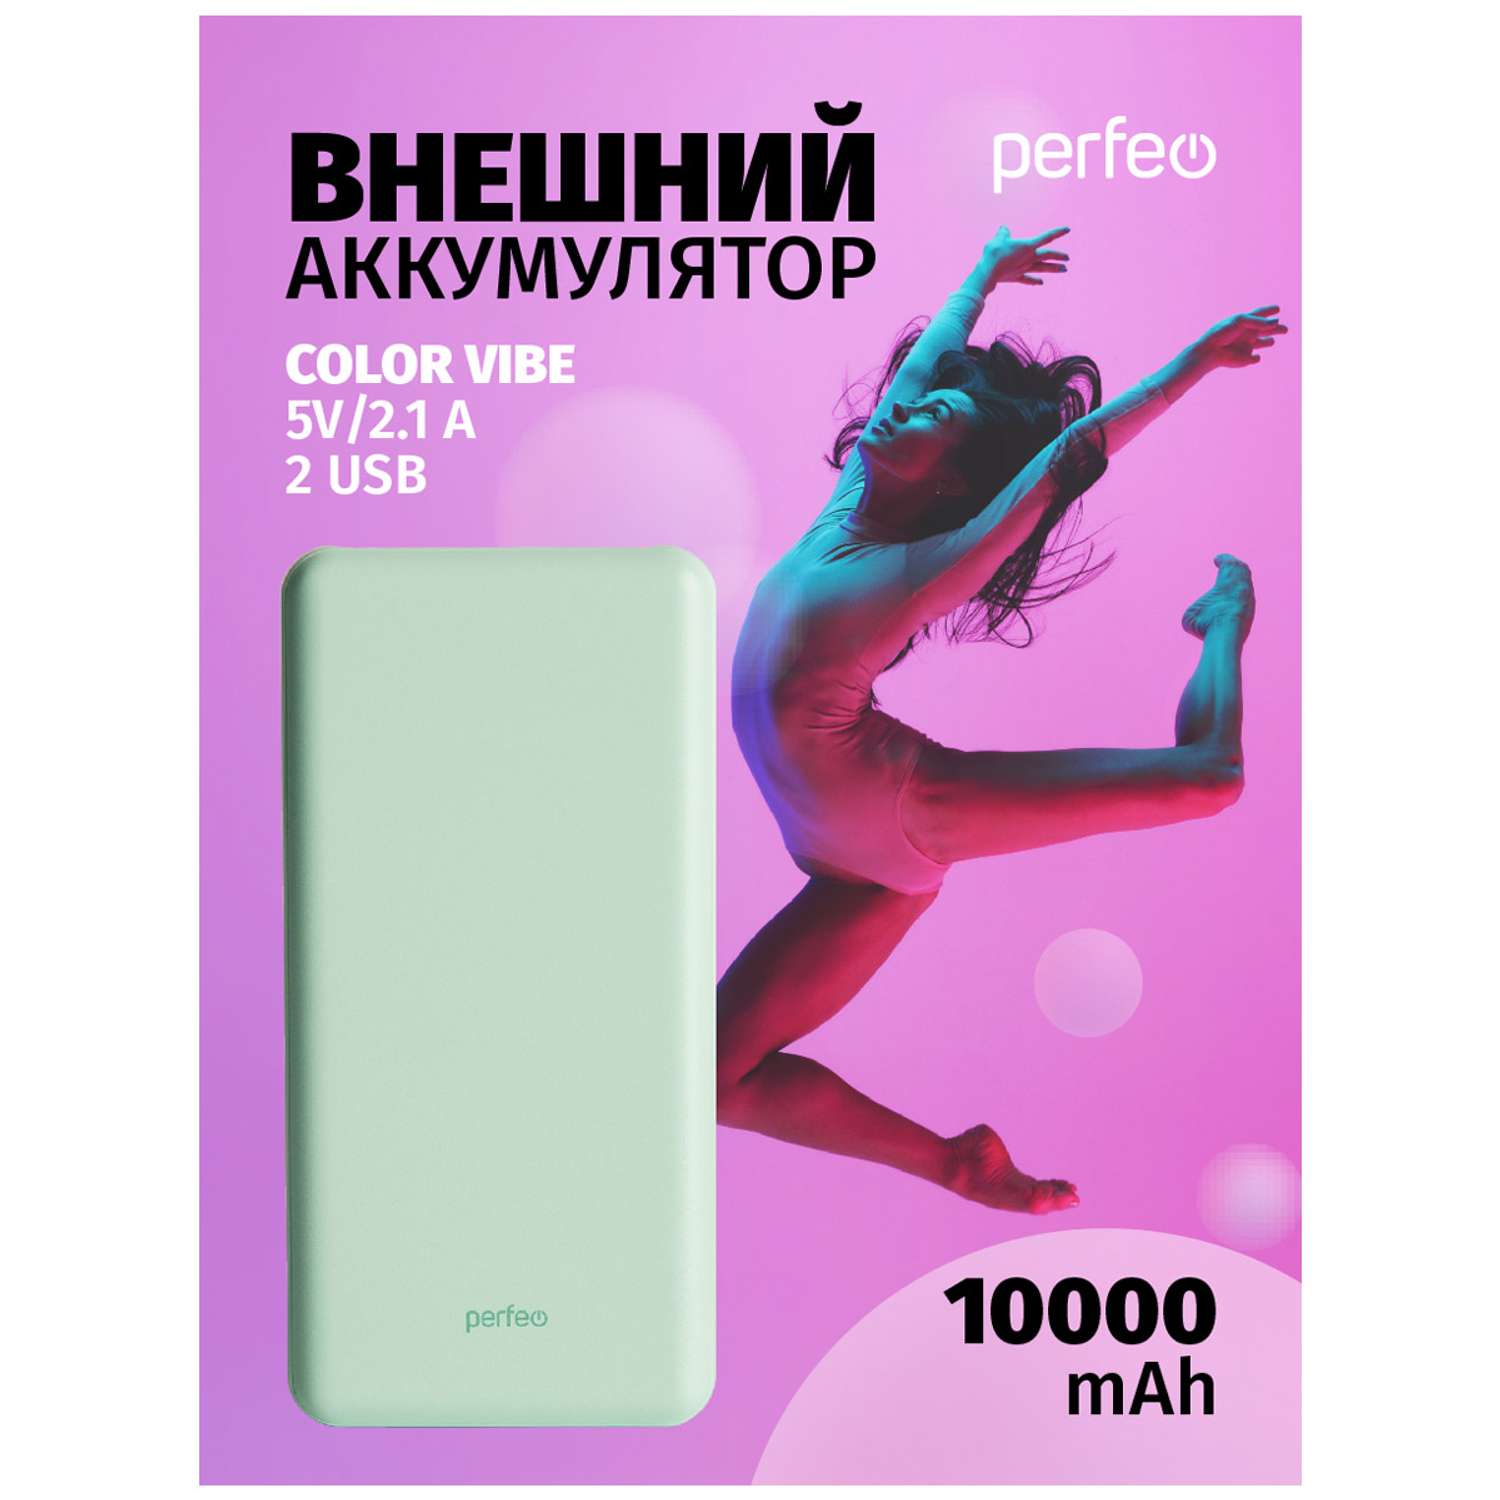 Внешний аккумулятор Perfeo Color Vibe 10000 мятный - фото 2